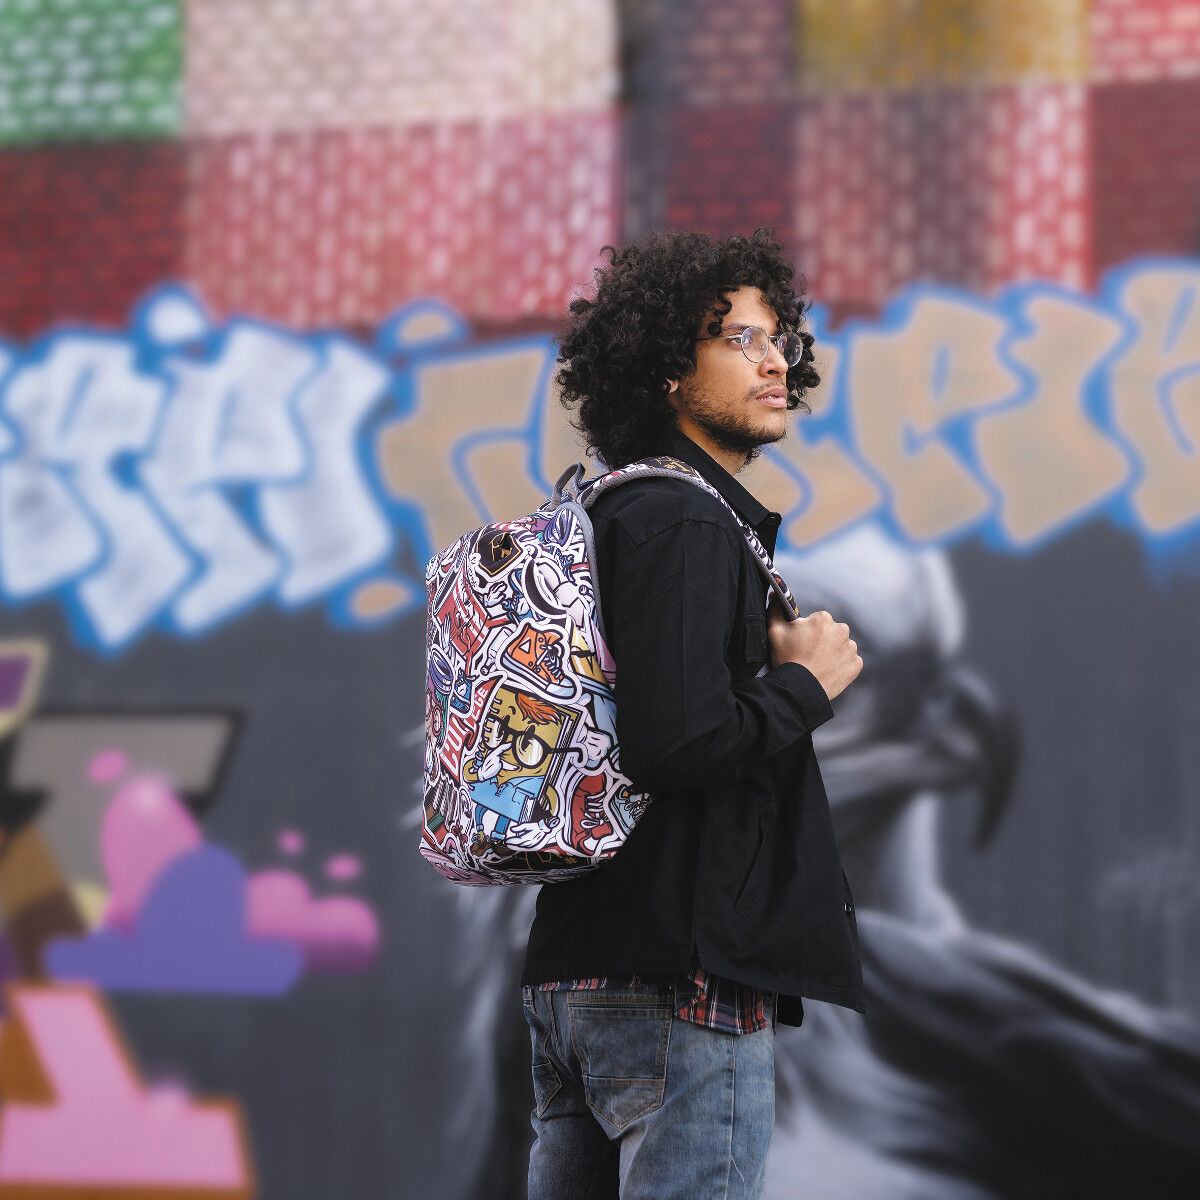 Bobby Soft ART anti-theft backpack